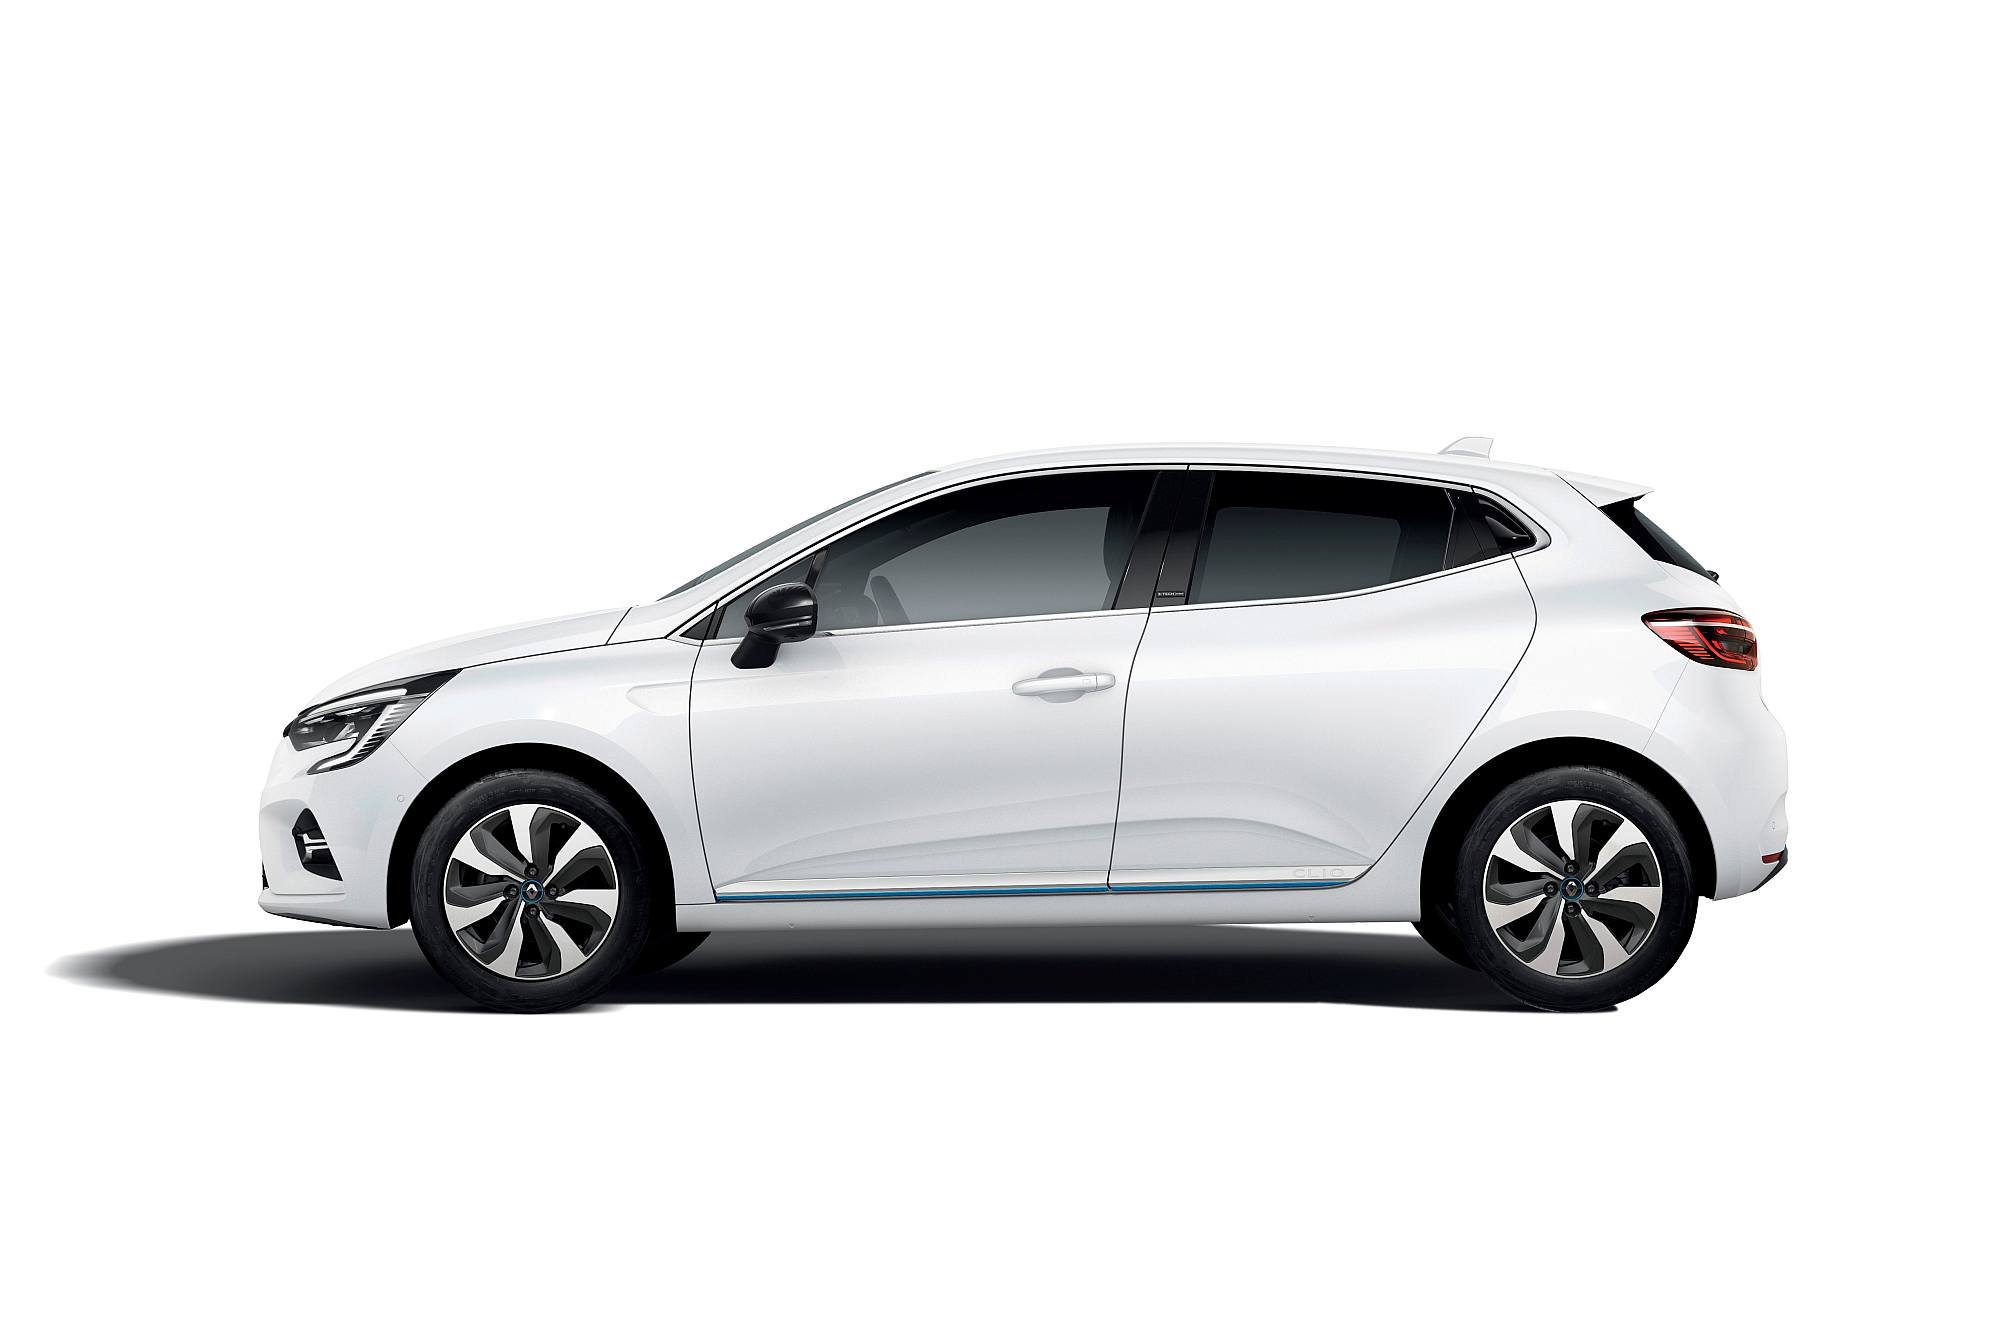 2020 – Nouvelle Renault CLIO E-TECH